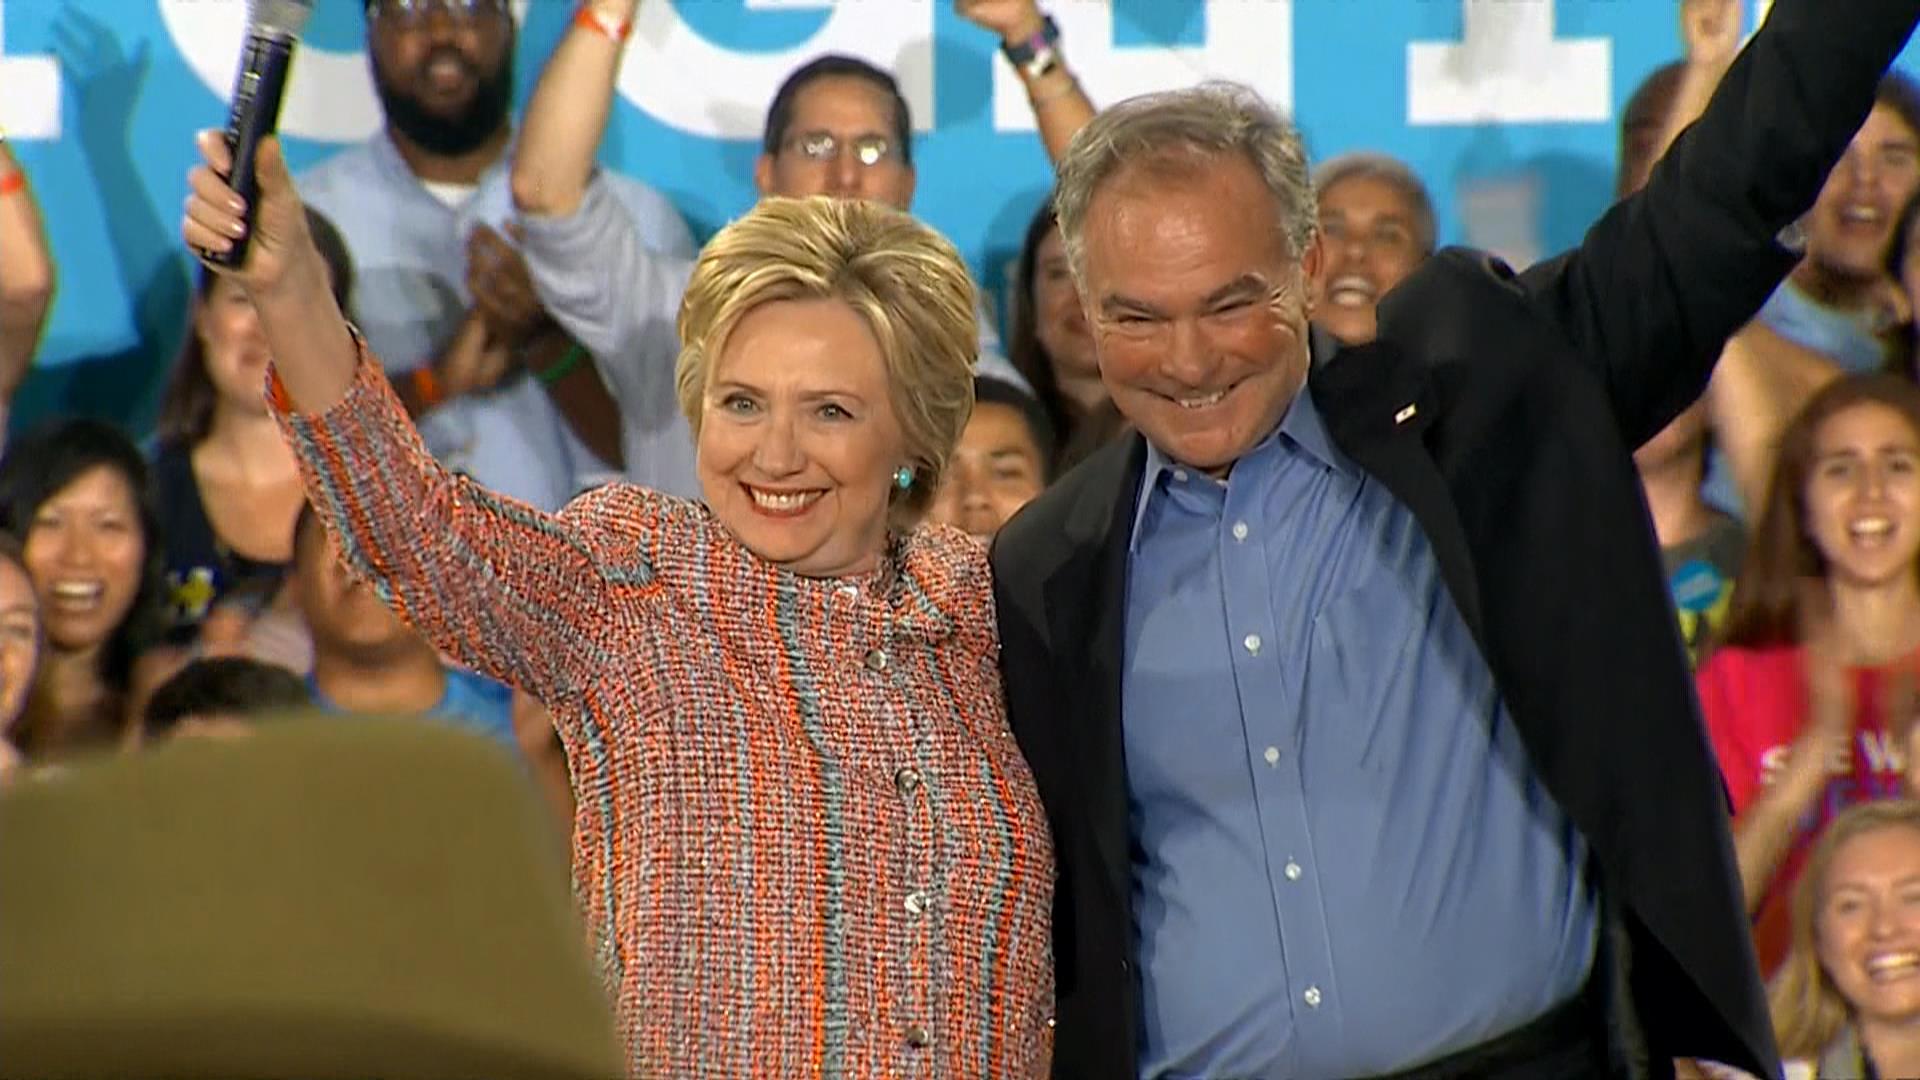 # 891 Tim Kaine 2016 Campaign Button Hillary Clinton